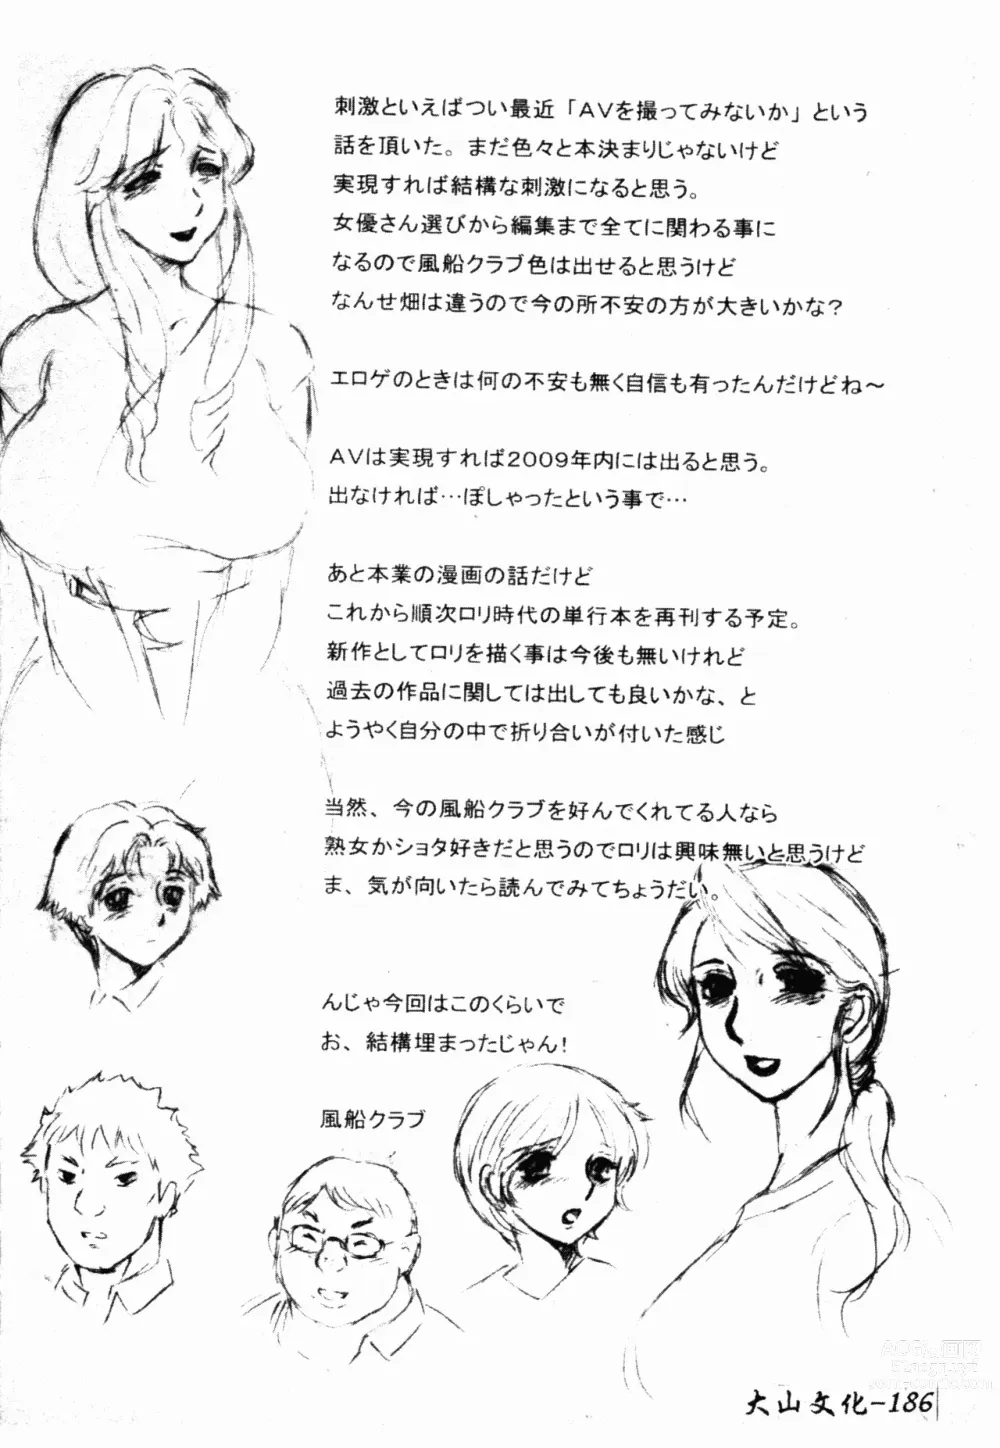 Page 182 of manga Haha Mamire